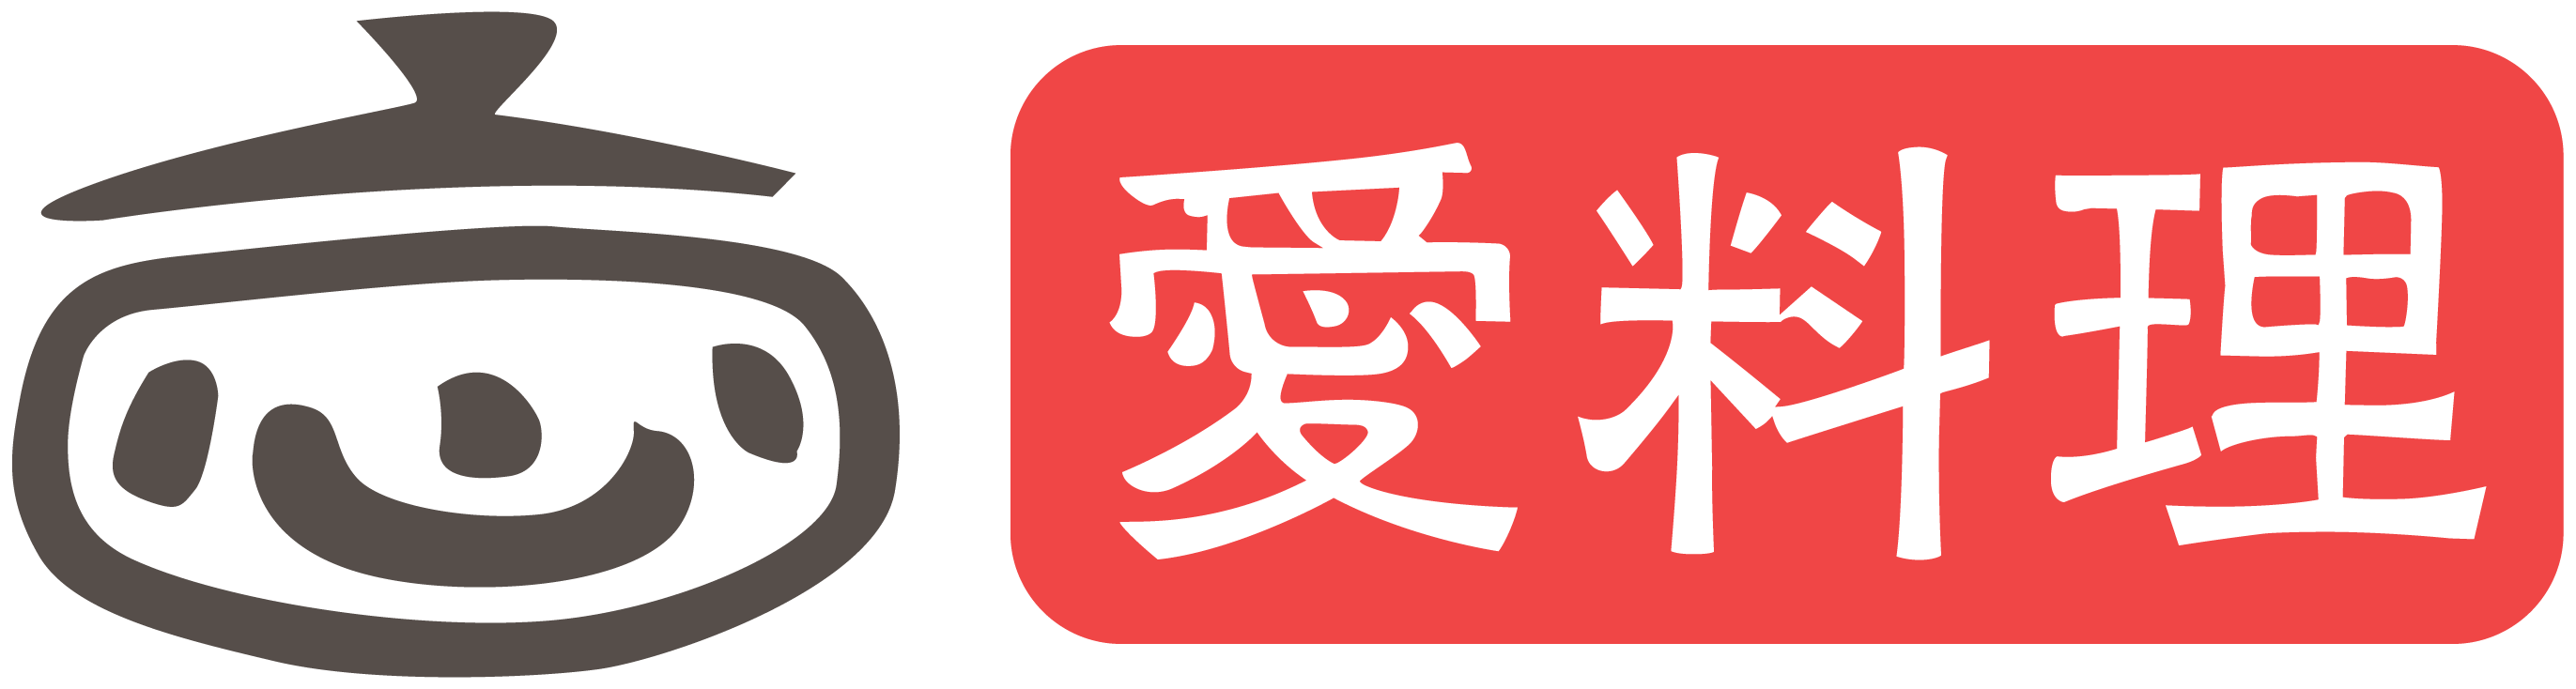 愛料理 logo